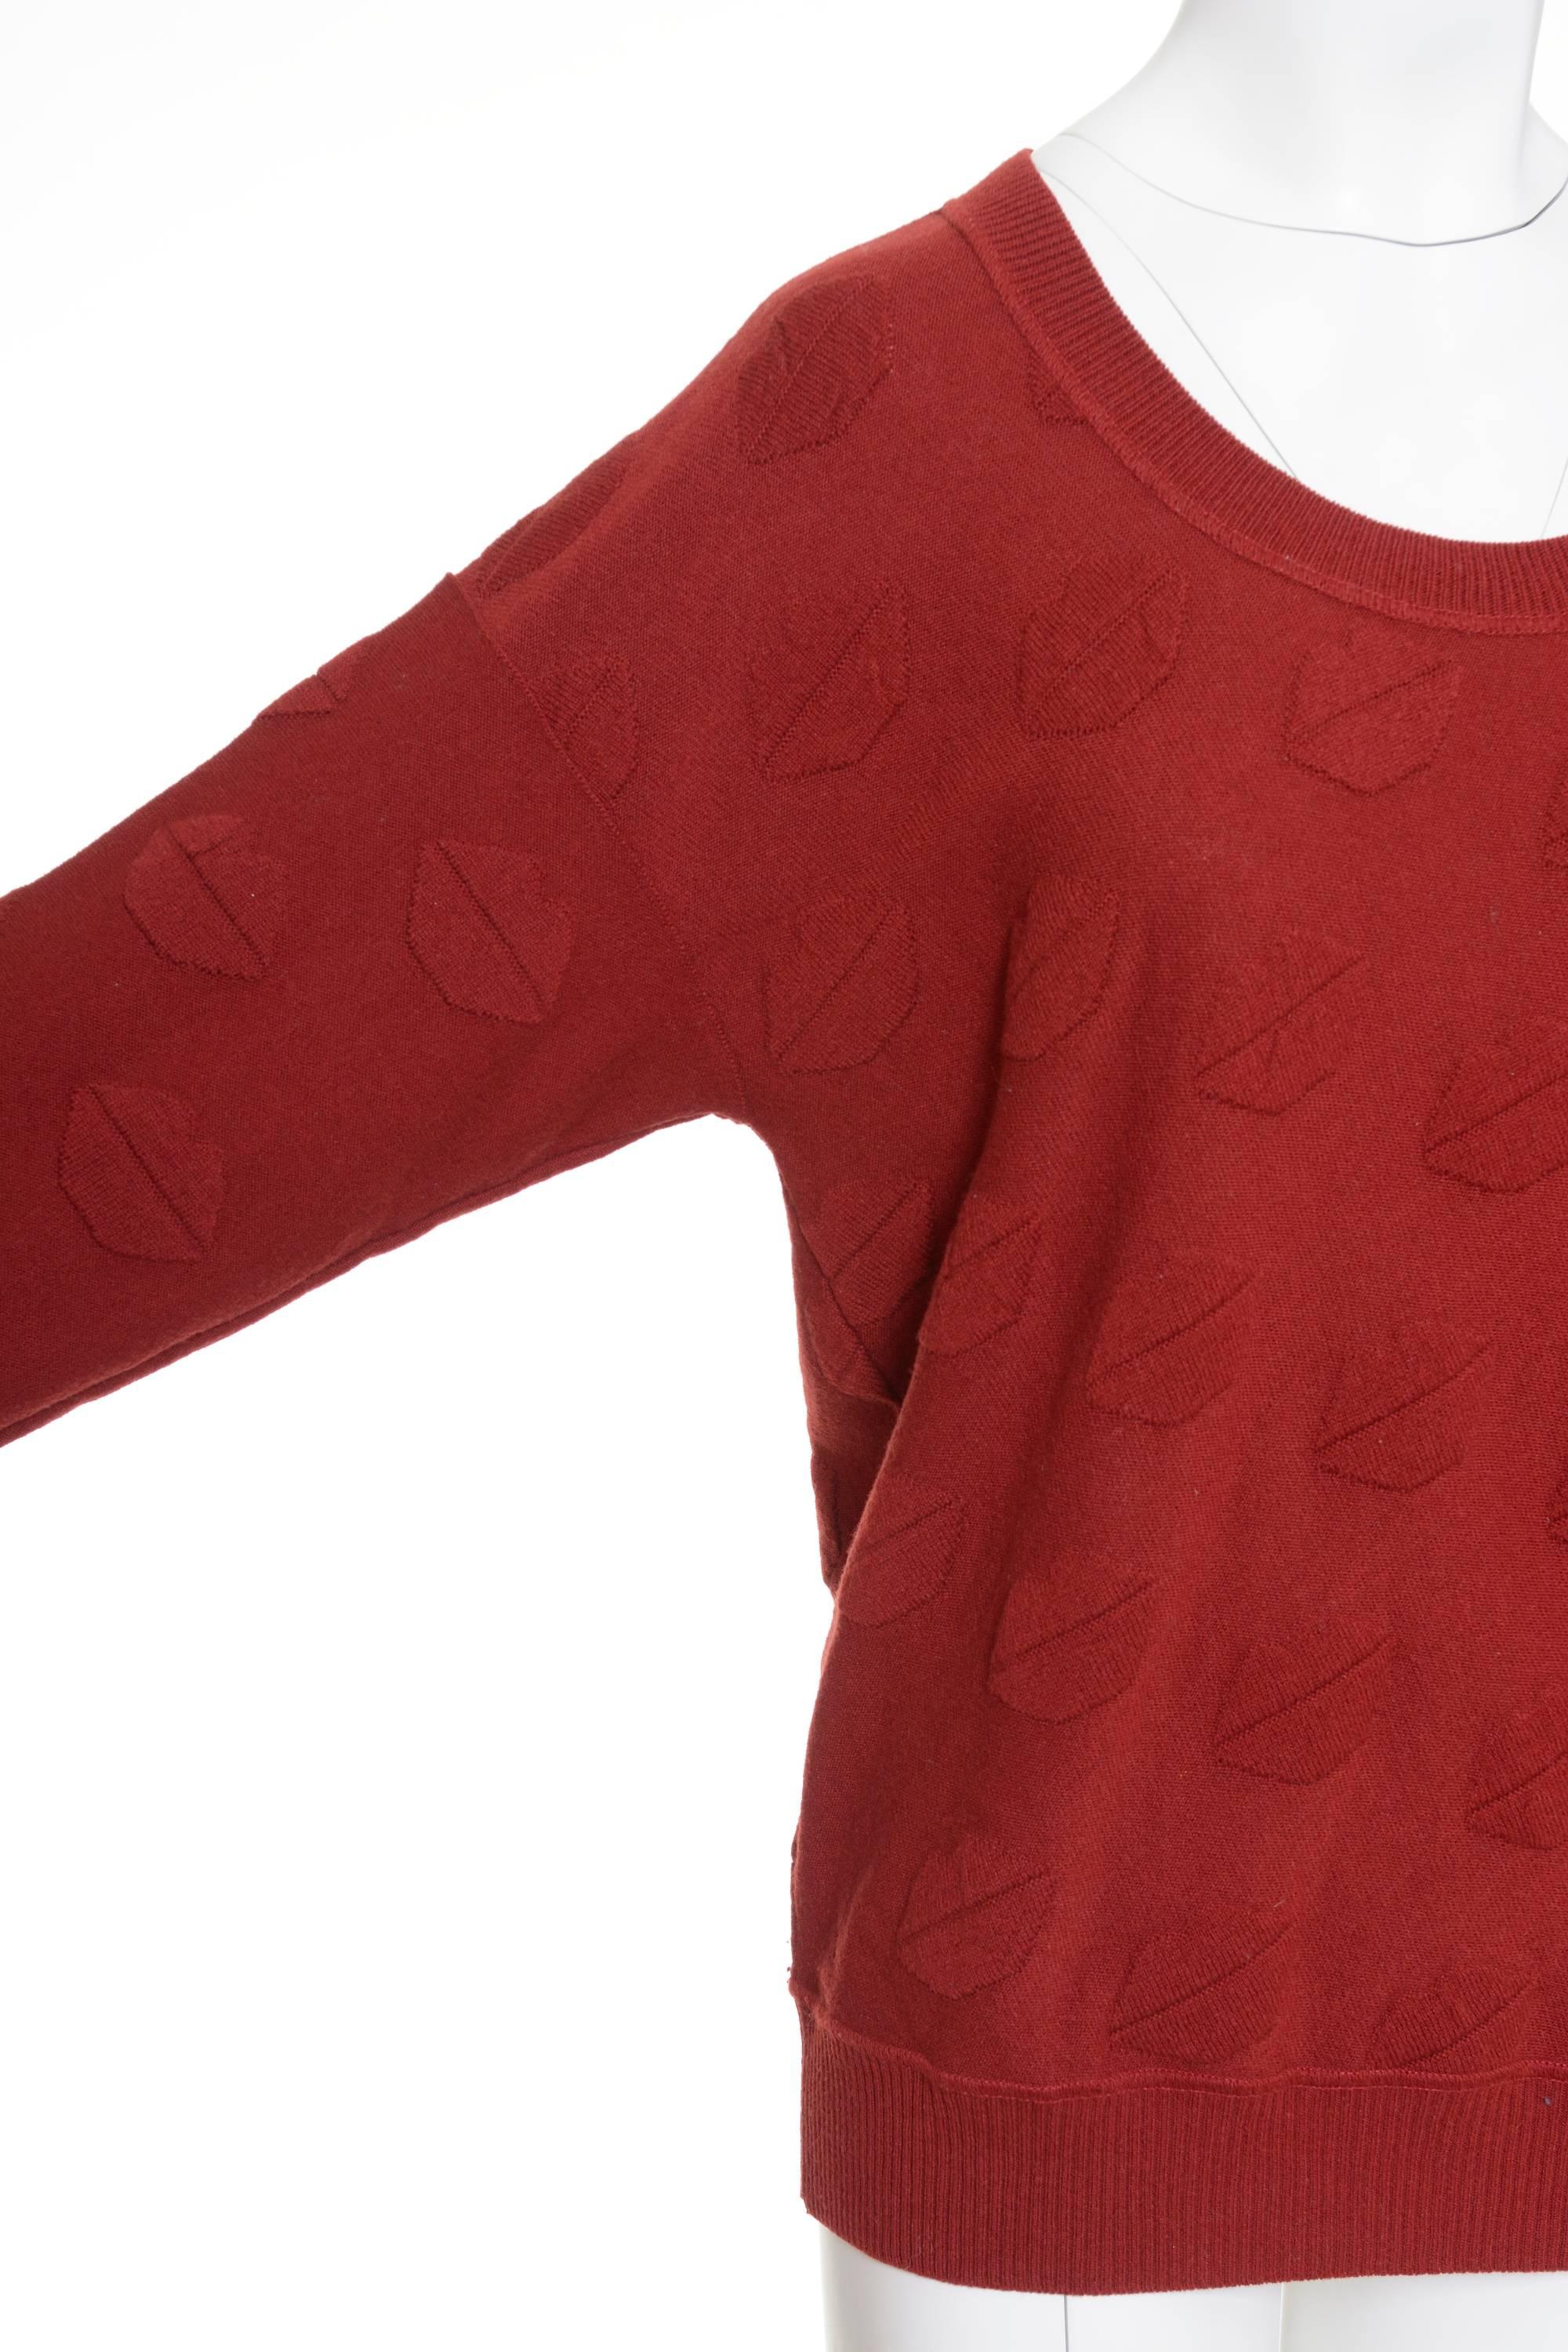 Red SONIA RYKIEL Lips Knit Sweater For Sale